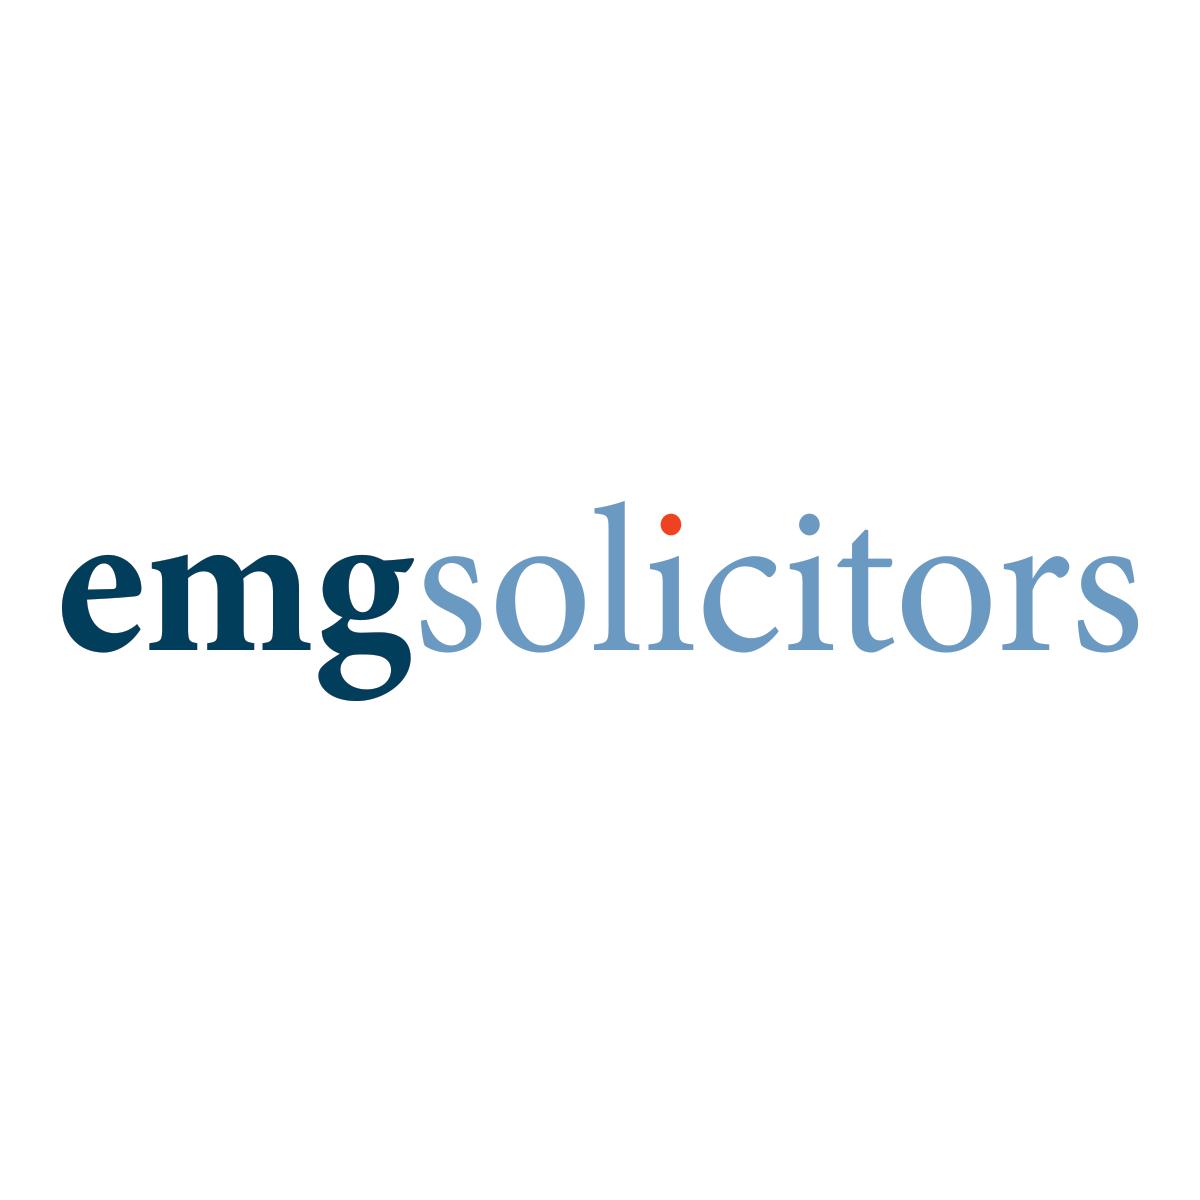 emgsolicitors's Logo